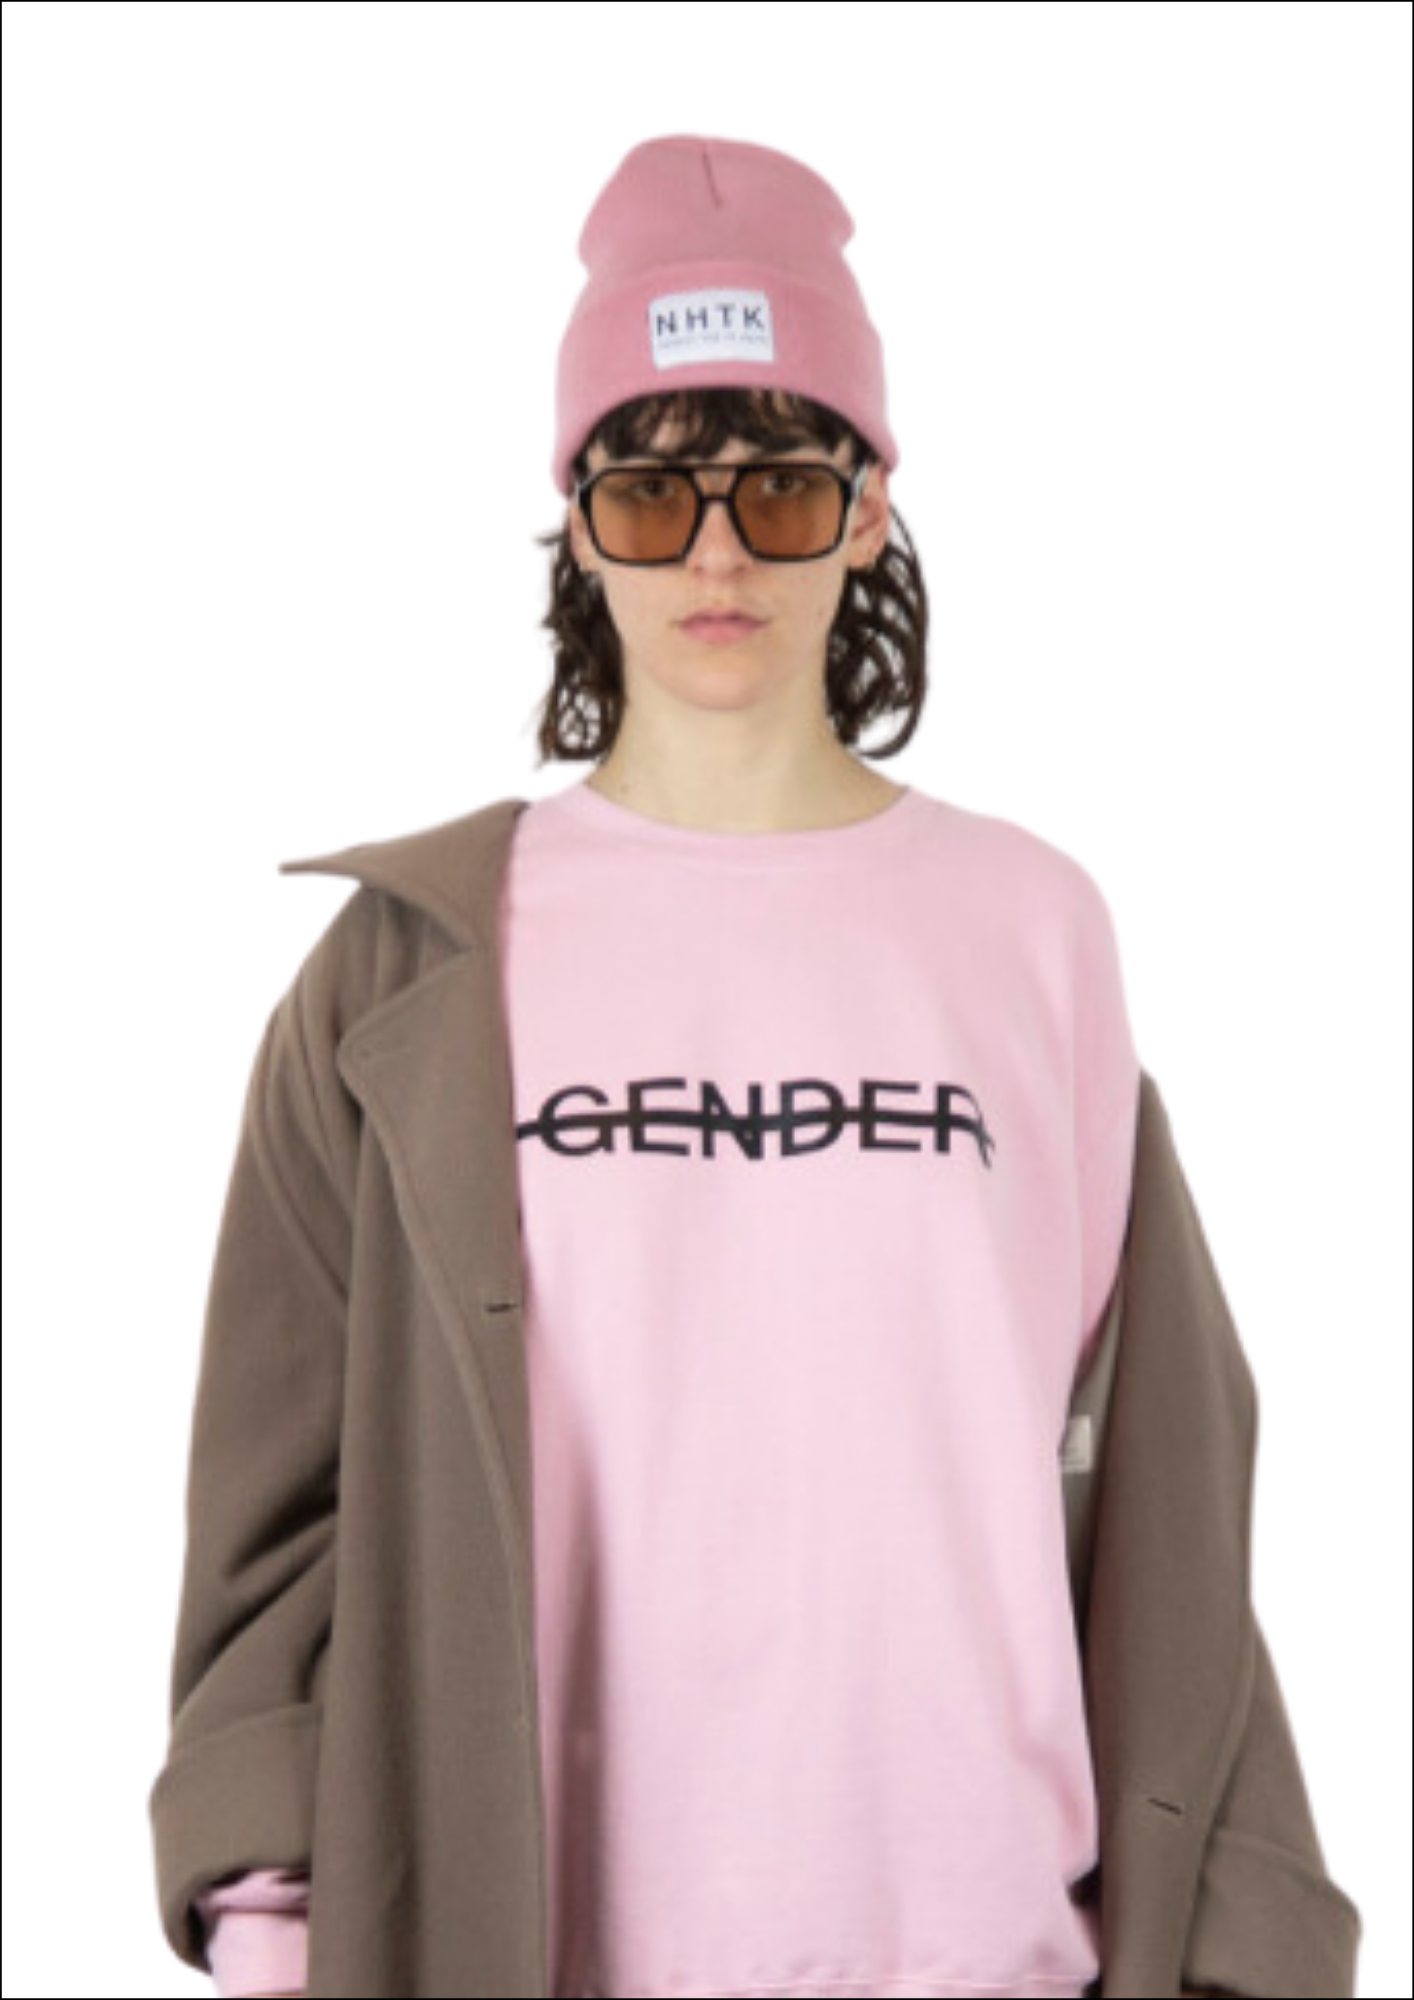 No gender sweater - ash